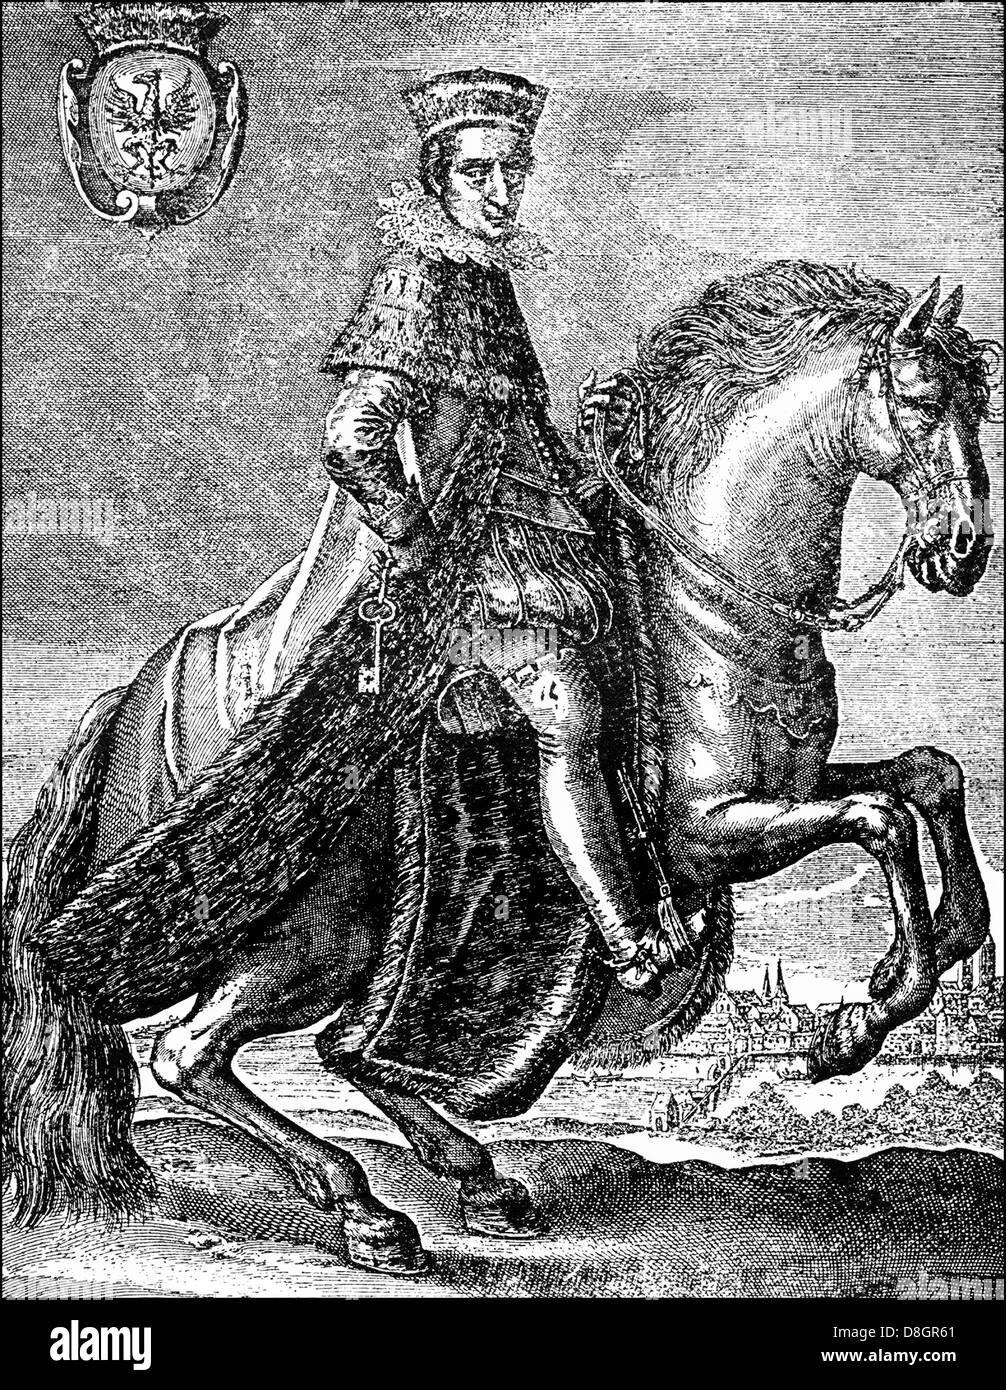 George William 1595 - 1640, dynastie des Hohenzollern, et margrave de Brandebourg, Allemagne, 17e siècle Banque D'Images